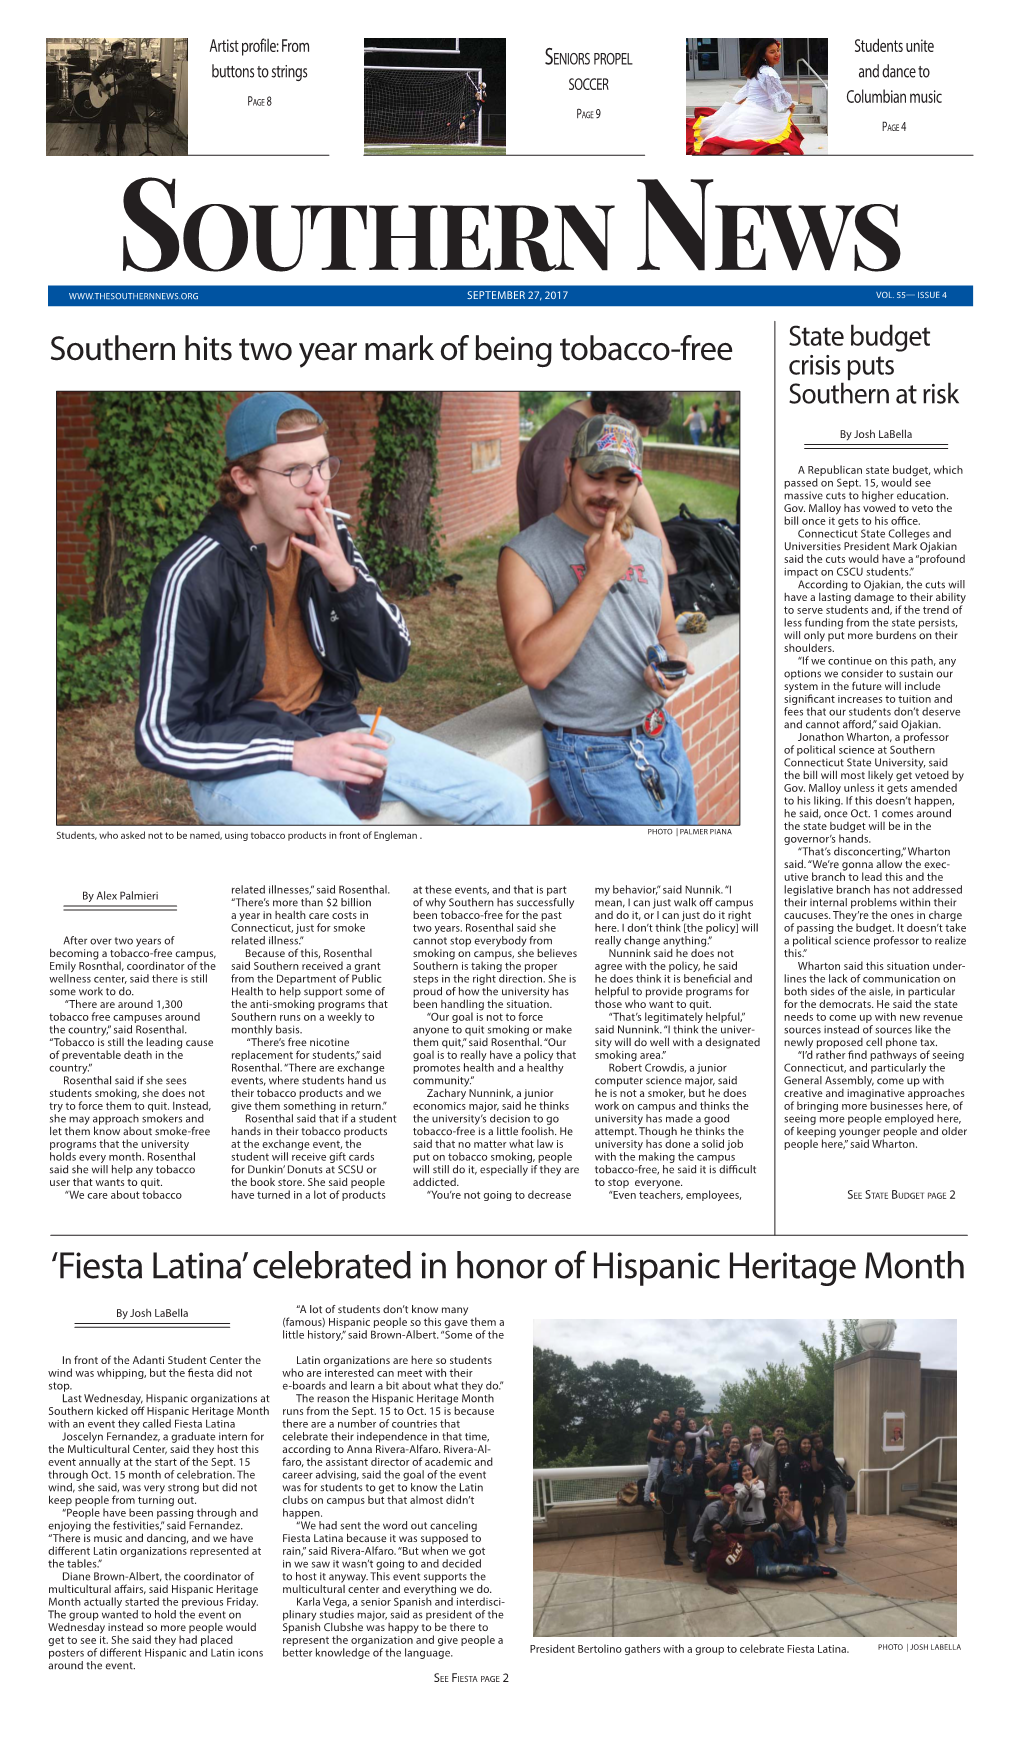 'Fiesta Latina' Celebrated in Honor of Hispanic Heritage Month